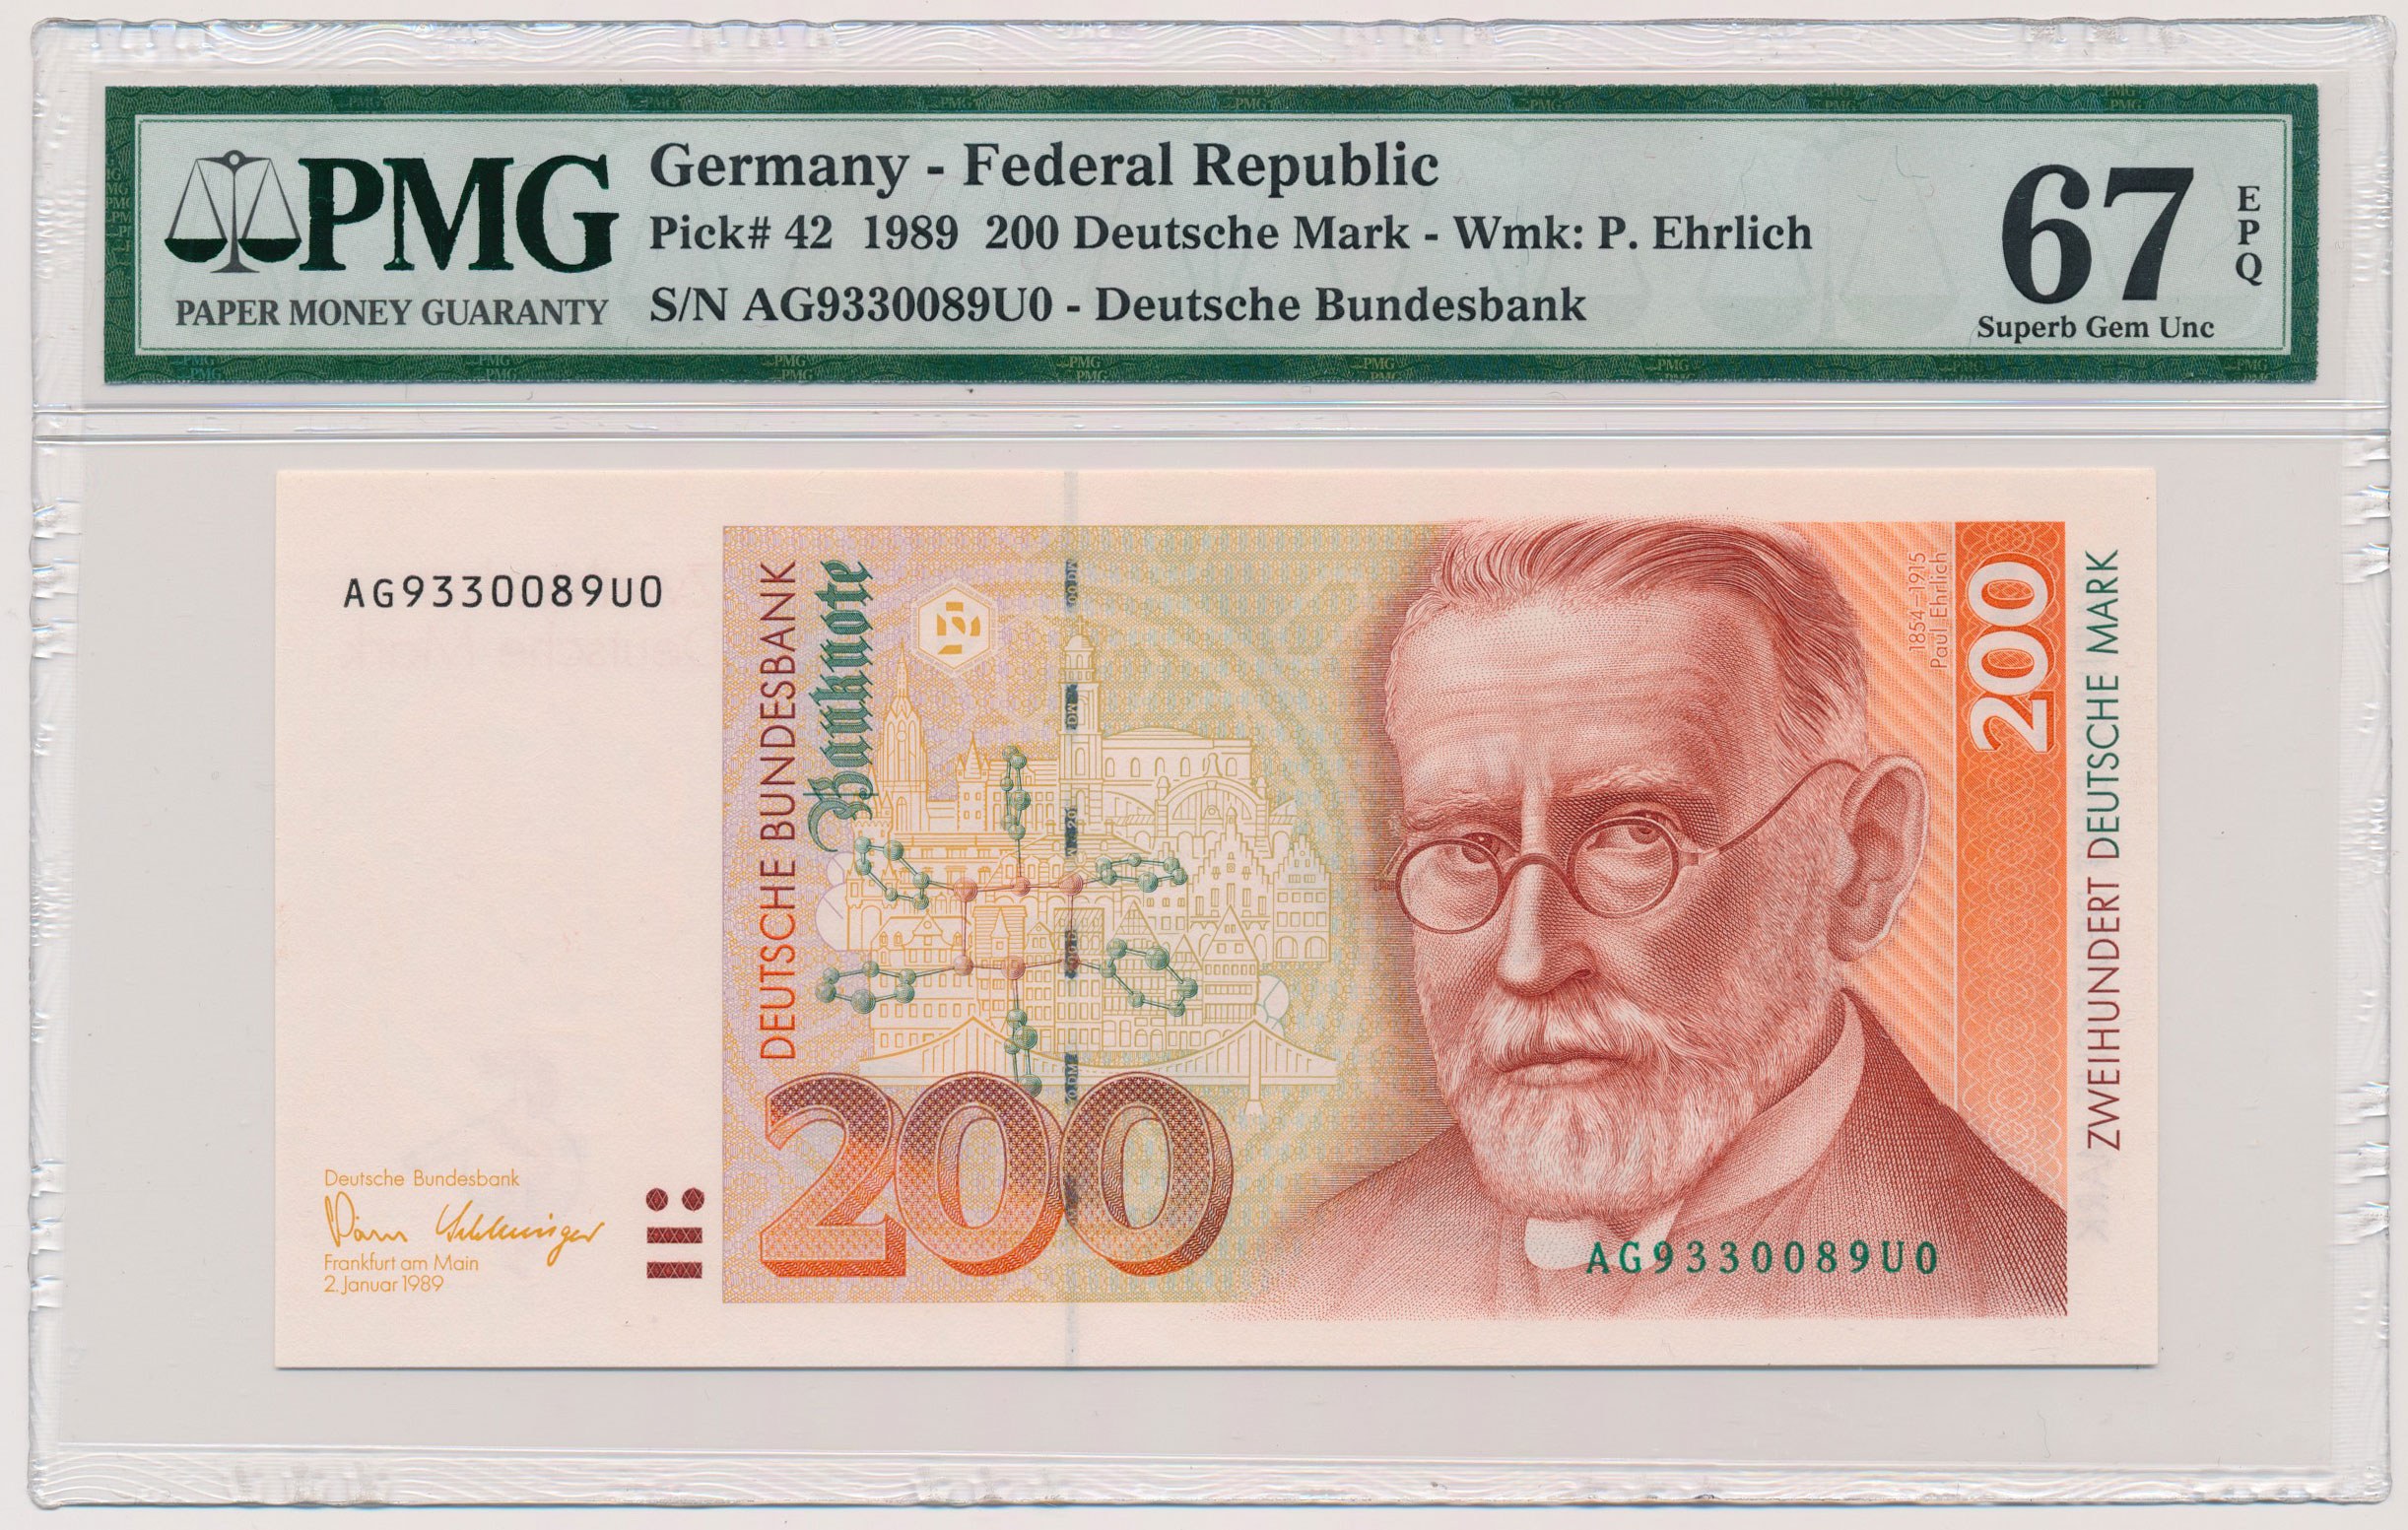 Deutsche mark. Немецкая марка. Немецкие марки валюта. Купюры Германии. Национальная валюта Германии.